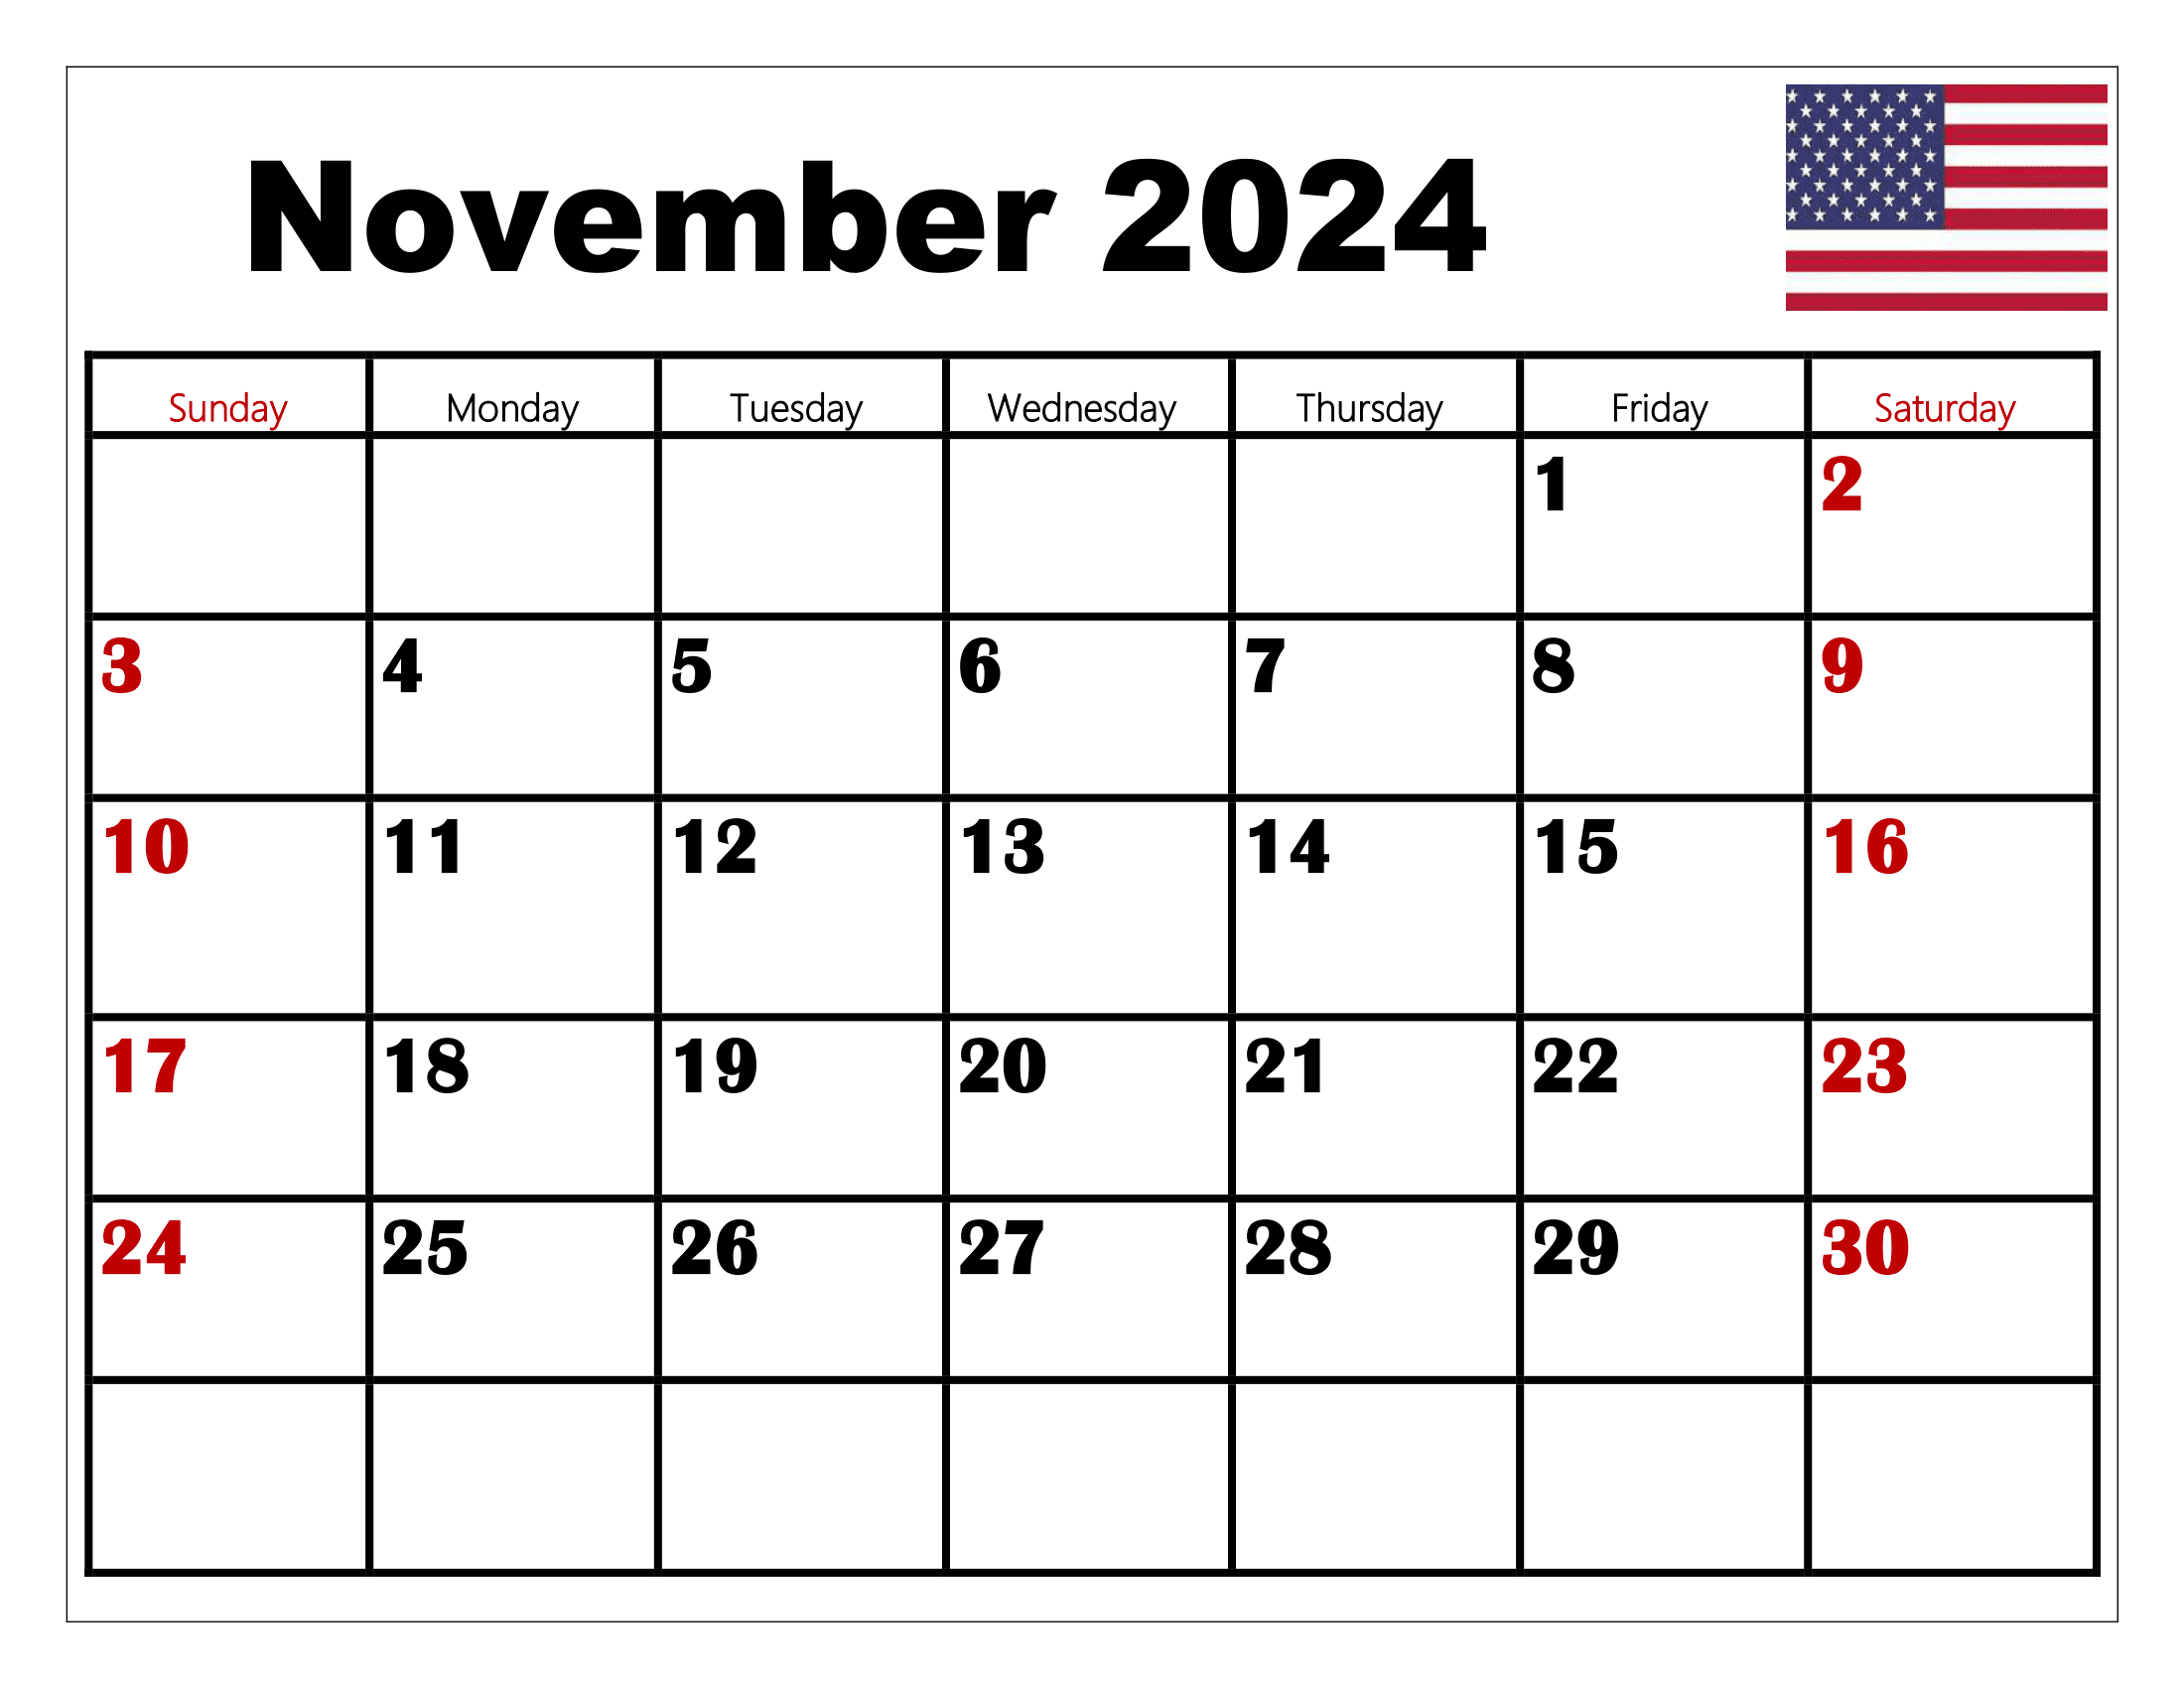 November 2024 Calendar Printable Pdf Template With Holidays with Free Printable Blank Calendar November 2024